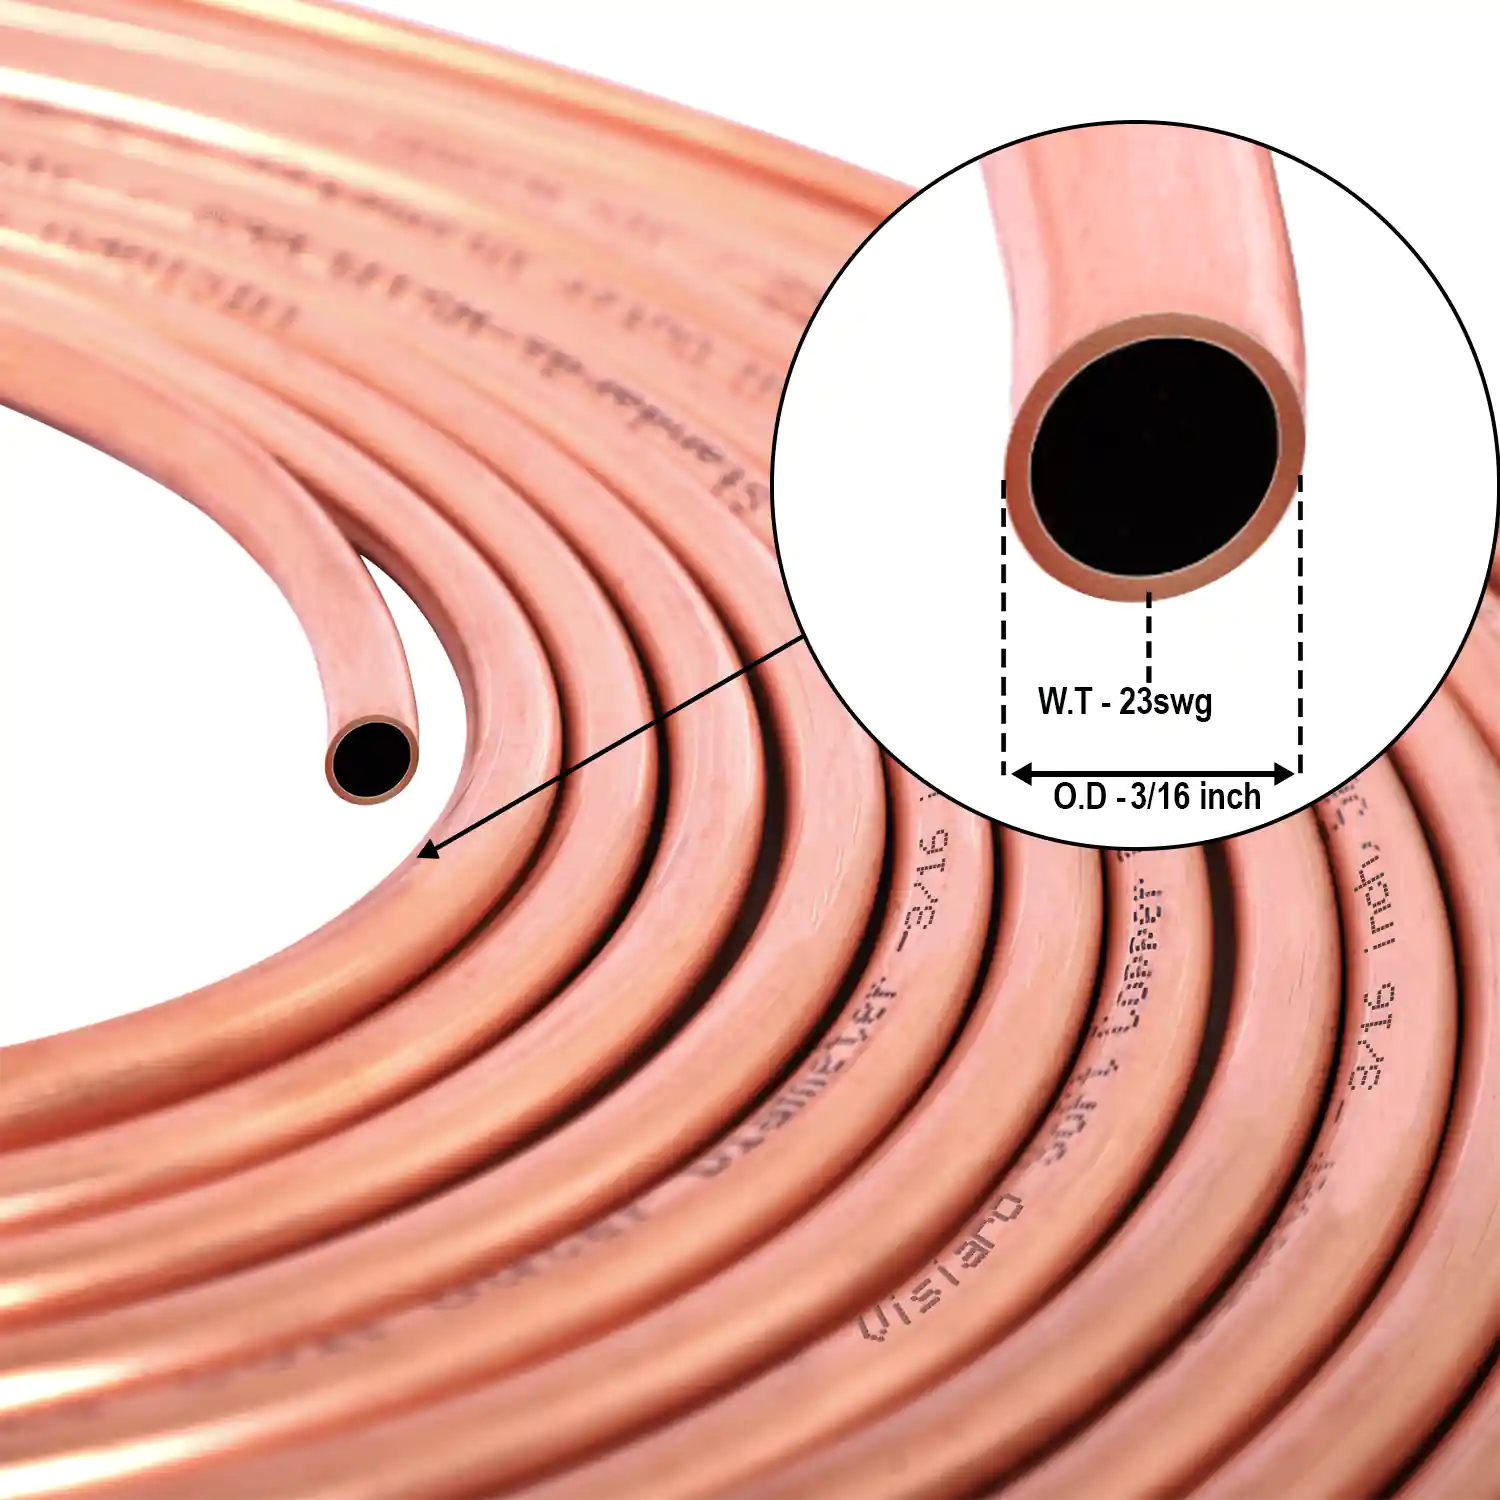 3/16 Flexible Copper Tubing - 50' Length